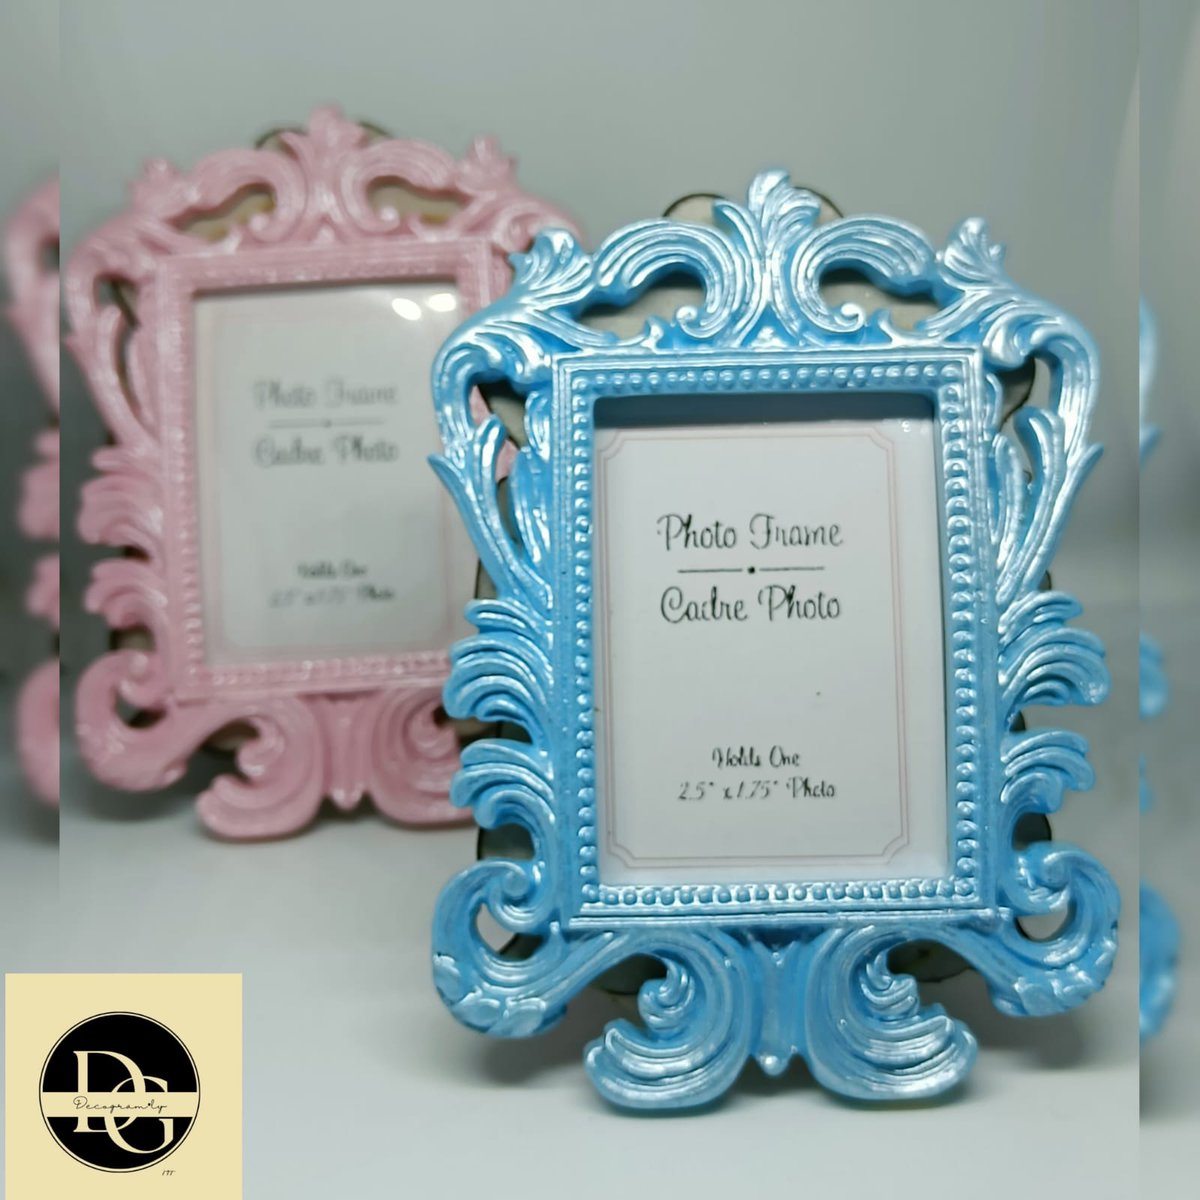 Mini photo frames ✨
Available in Blue and Pink color 💜
.
.
#giftideas #gift #decor #MSDhoni #IITMadras #Verified #Eid2023 #Adipurush #TereBin #PriyankaChaharChoudhary #gigi #JIMINJIMIN #KisiKaBhaiKisiKiJaanReview #Prabhas #amirkhan